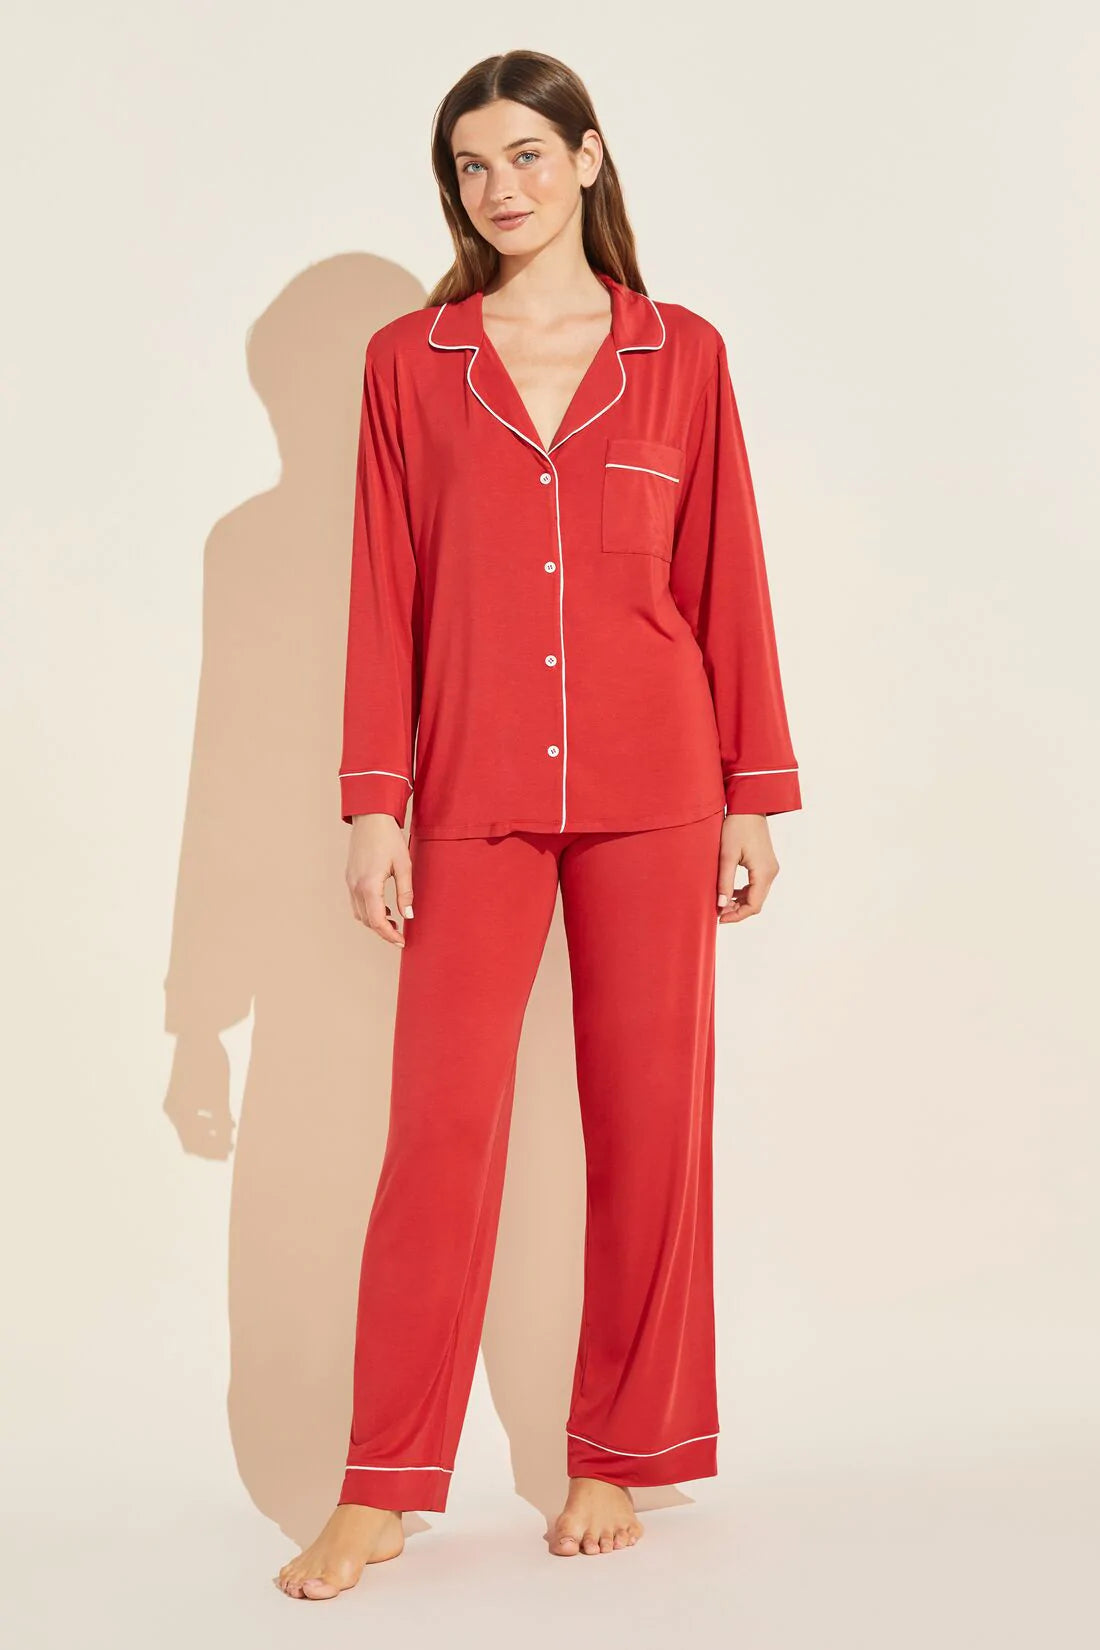 Eberjey Gisele Long PJ Set - Solid Red